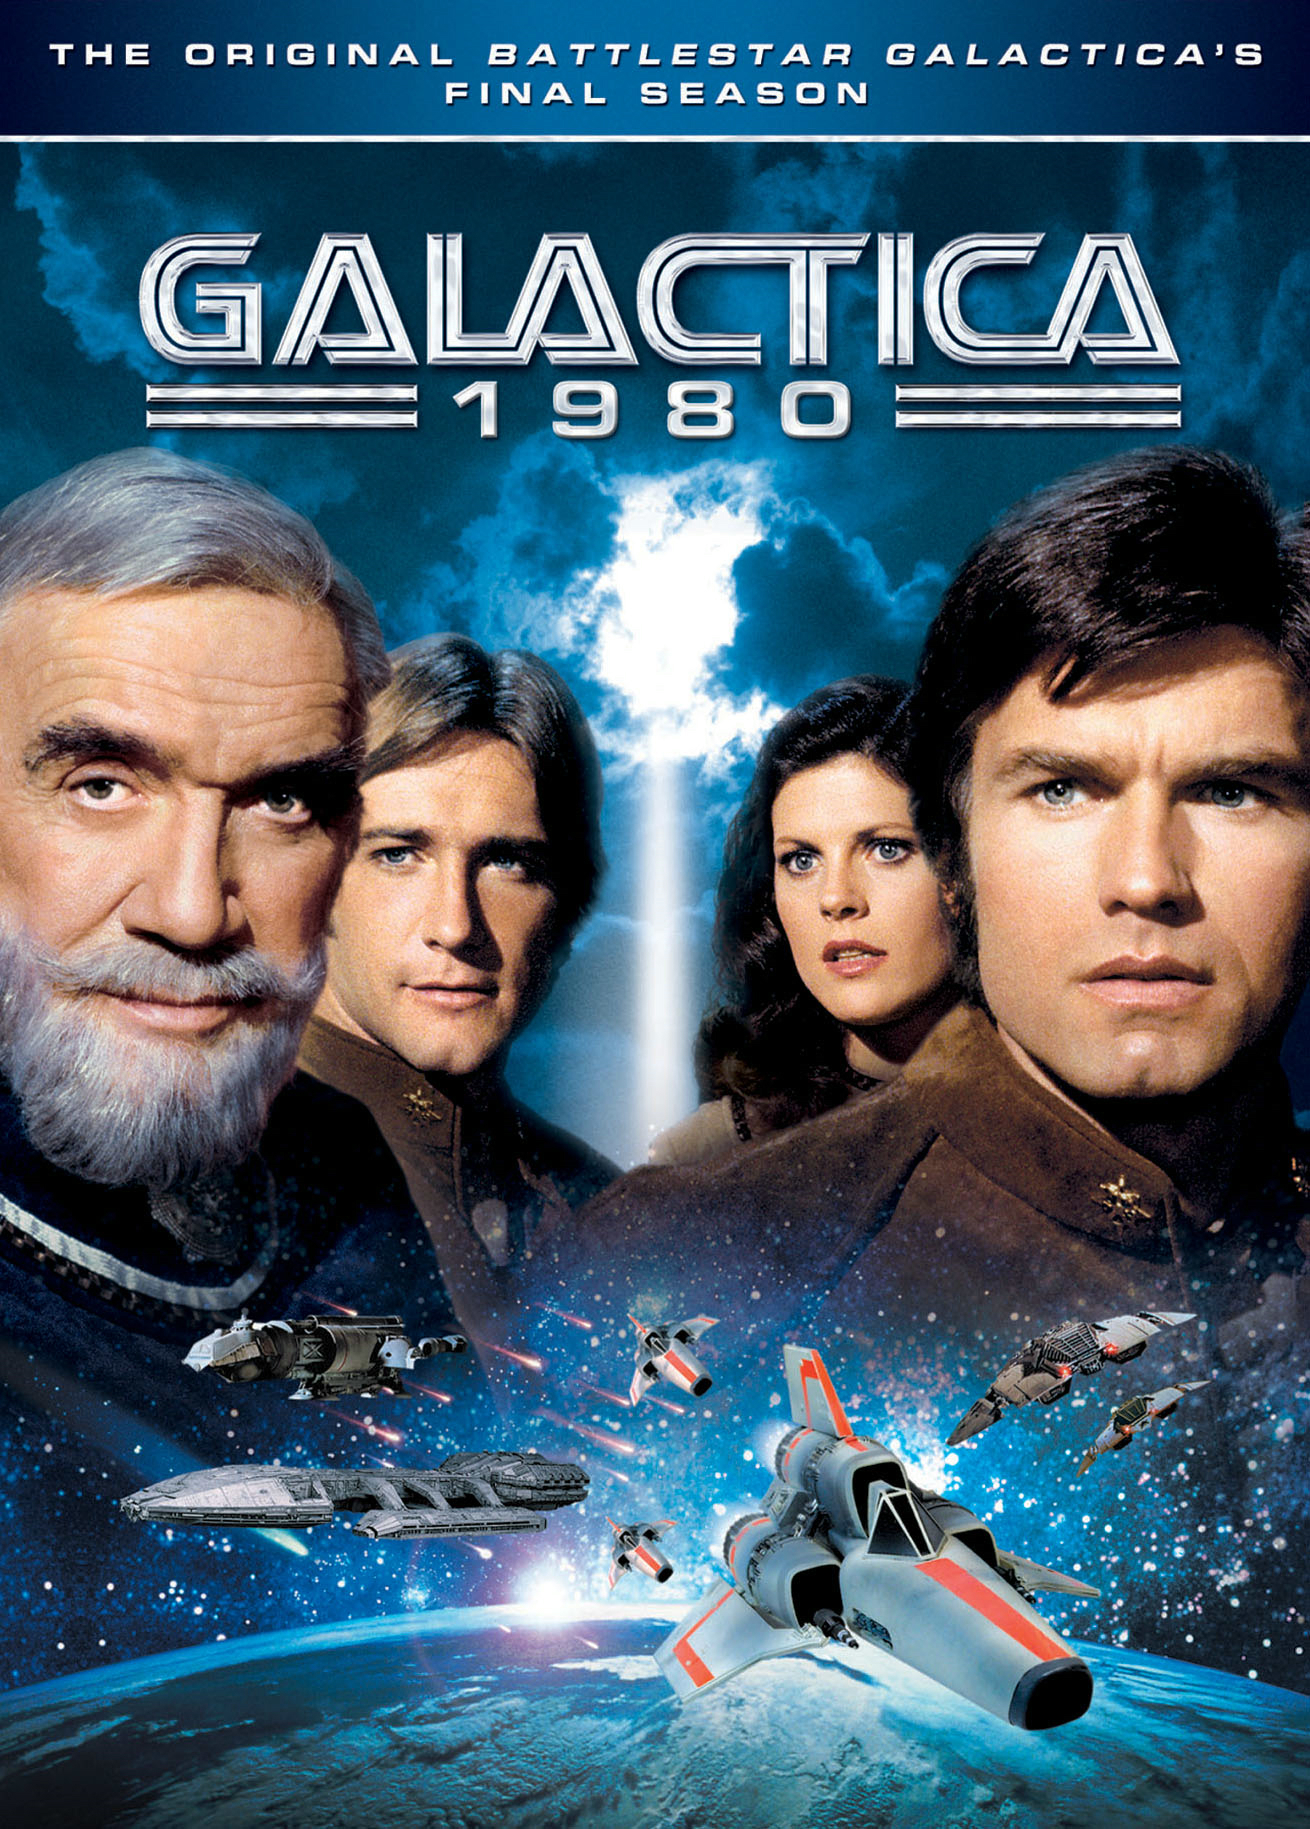 Battlestar Galactica 1980: The Final Season - DVD [ 1978 ]  - Sci Fi Television On DVD - TV Shows On GRUV